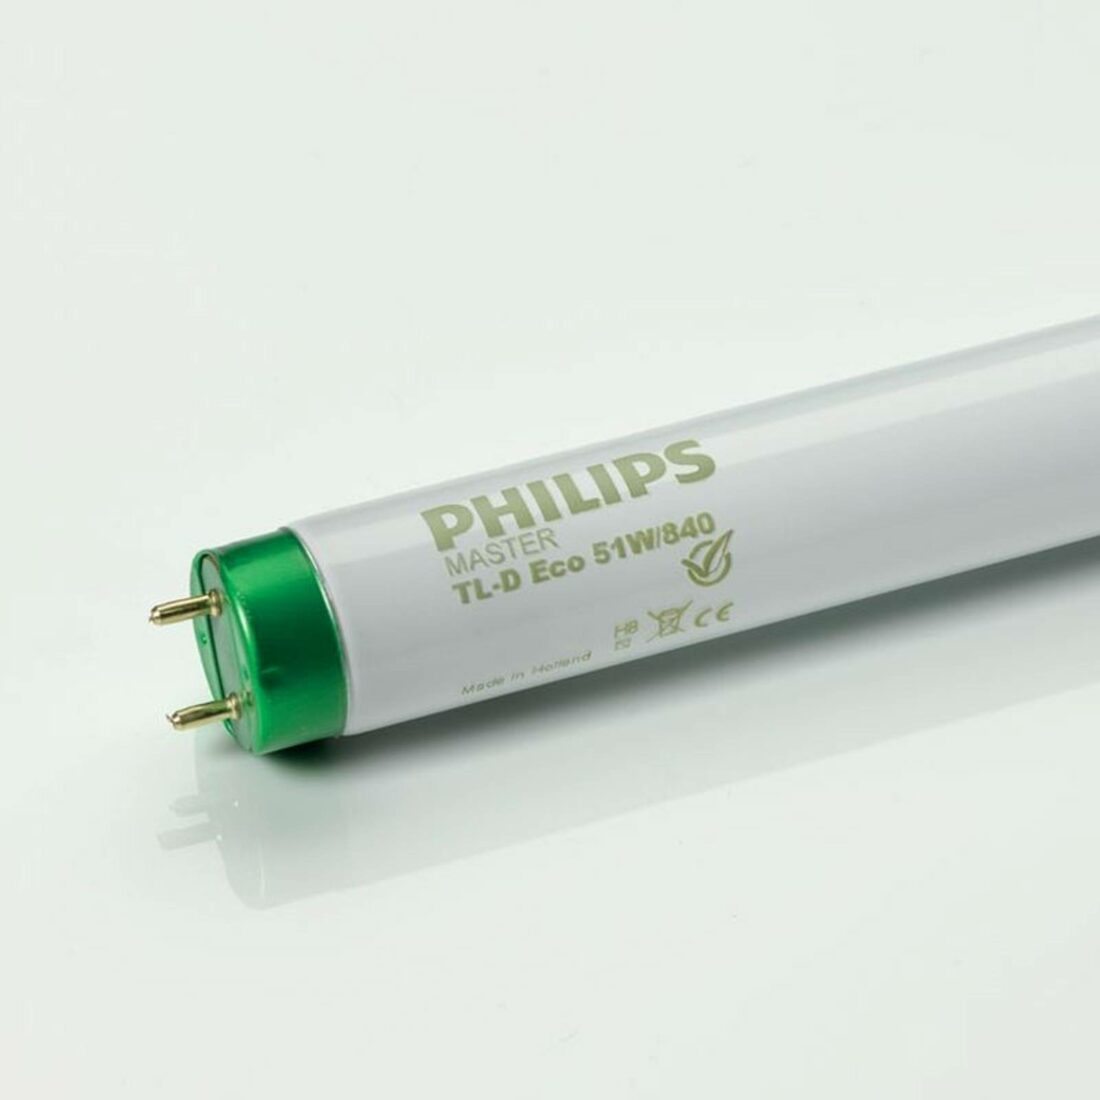 Philips Zářivka G13 T8 Master TL-D Eco 840 32W